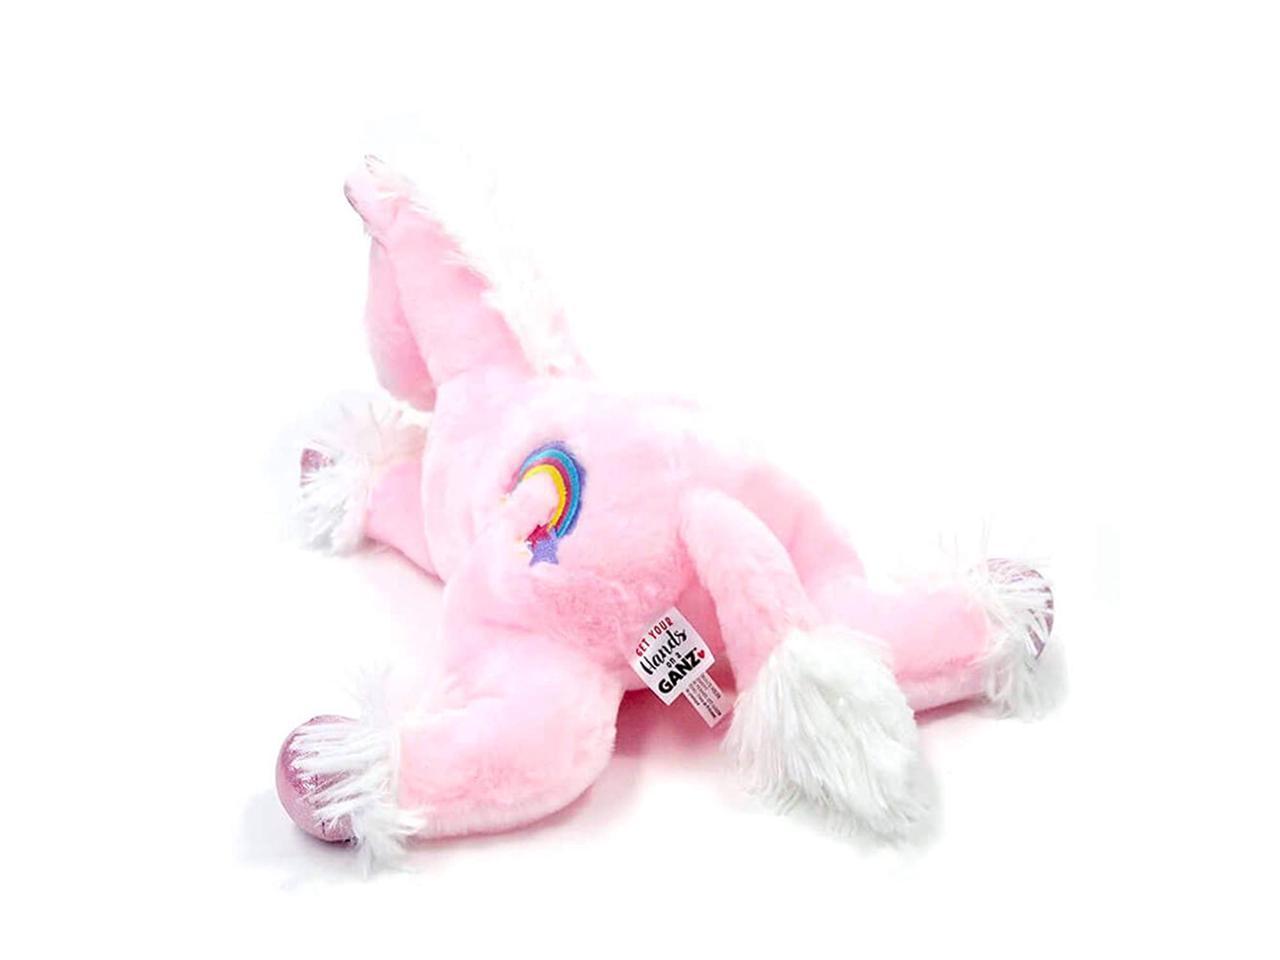 Ganz Baby Girl Boy Plush Stuffed Animal Toy Heart Tuggers 8" Unicorn 